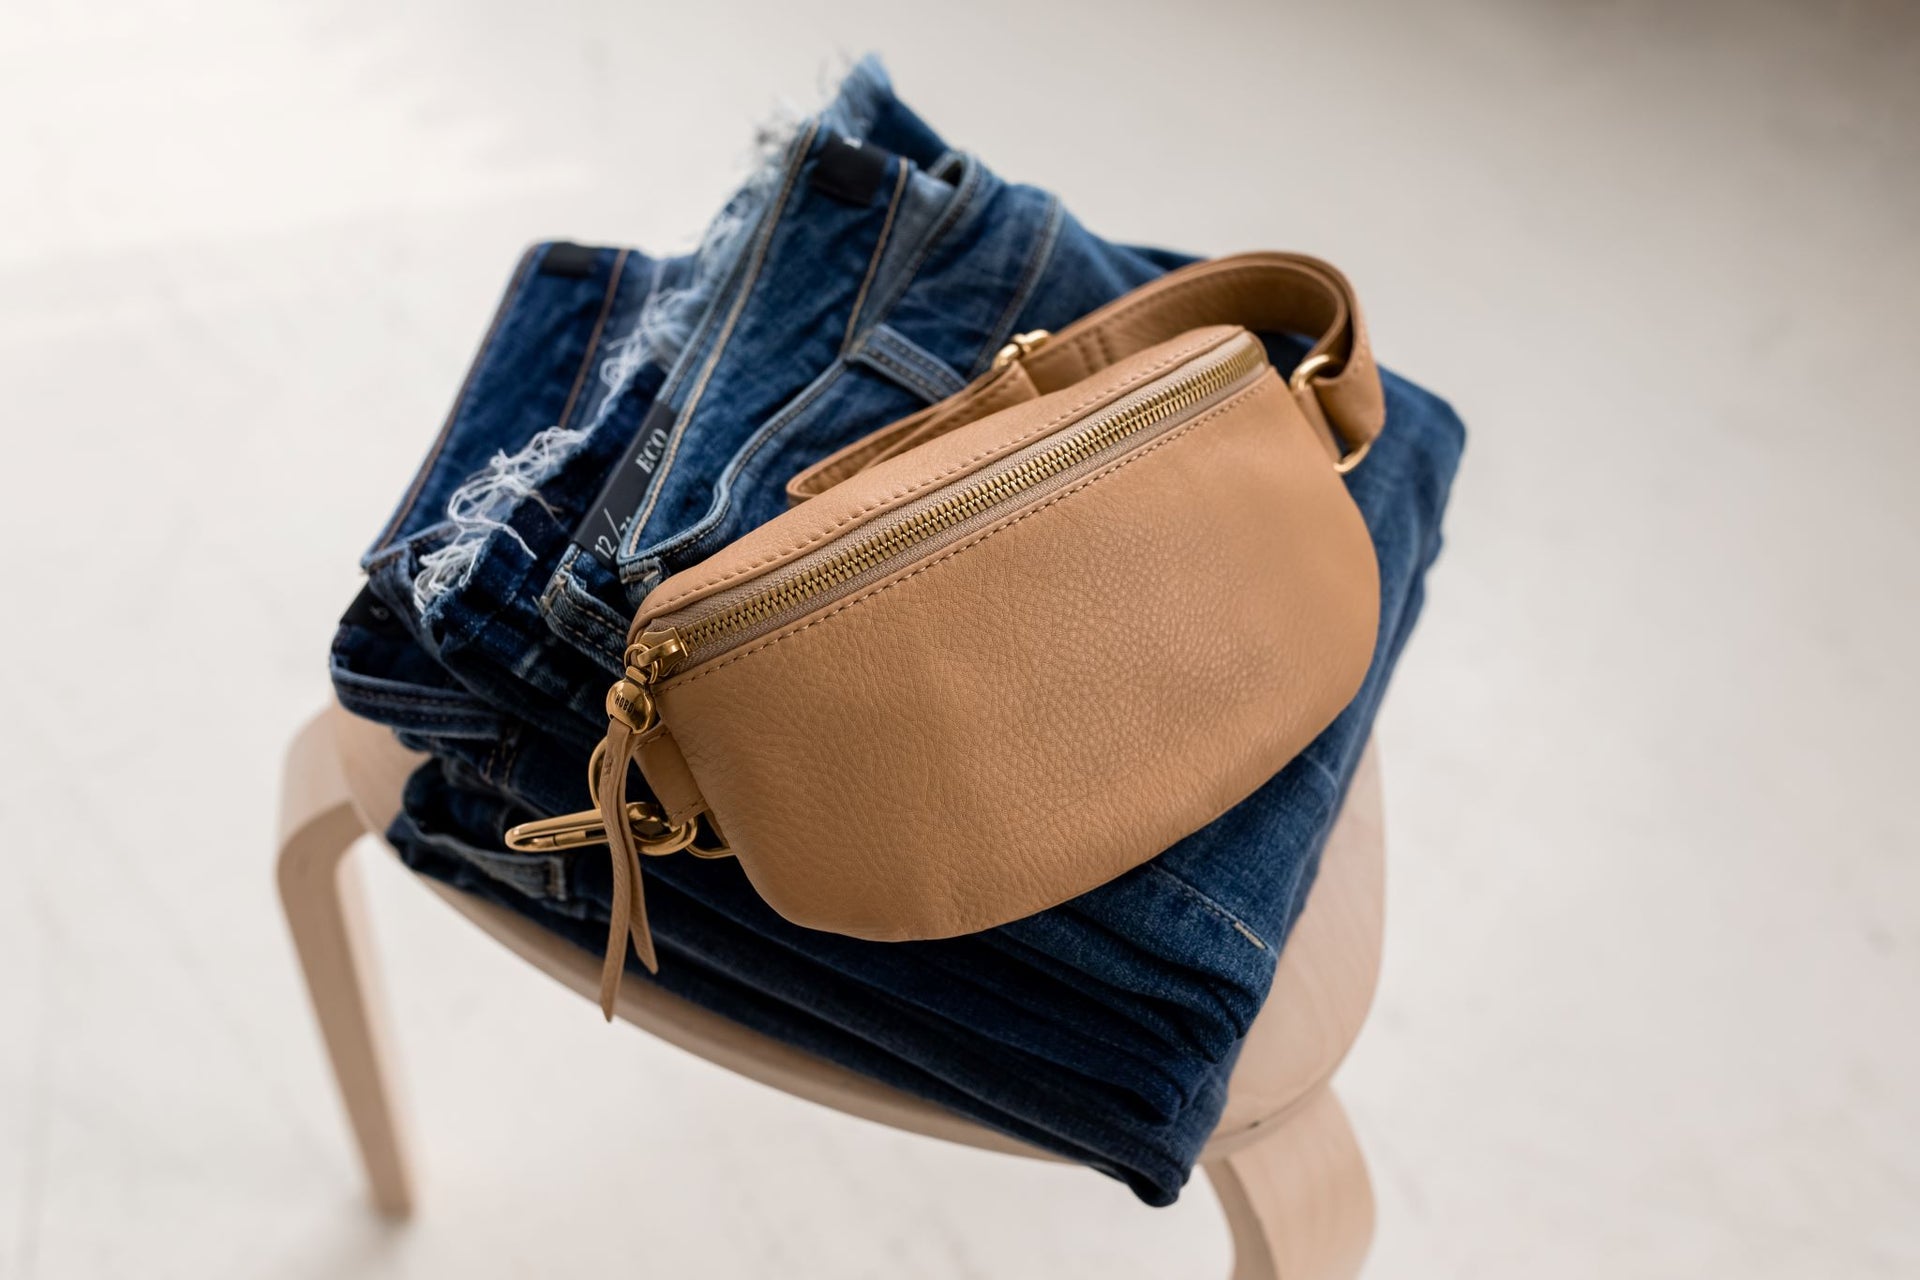 Tru Blue handbags, purses, totes and backpacks.